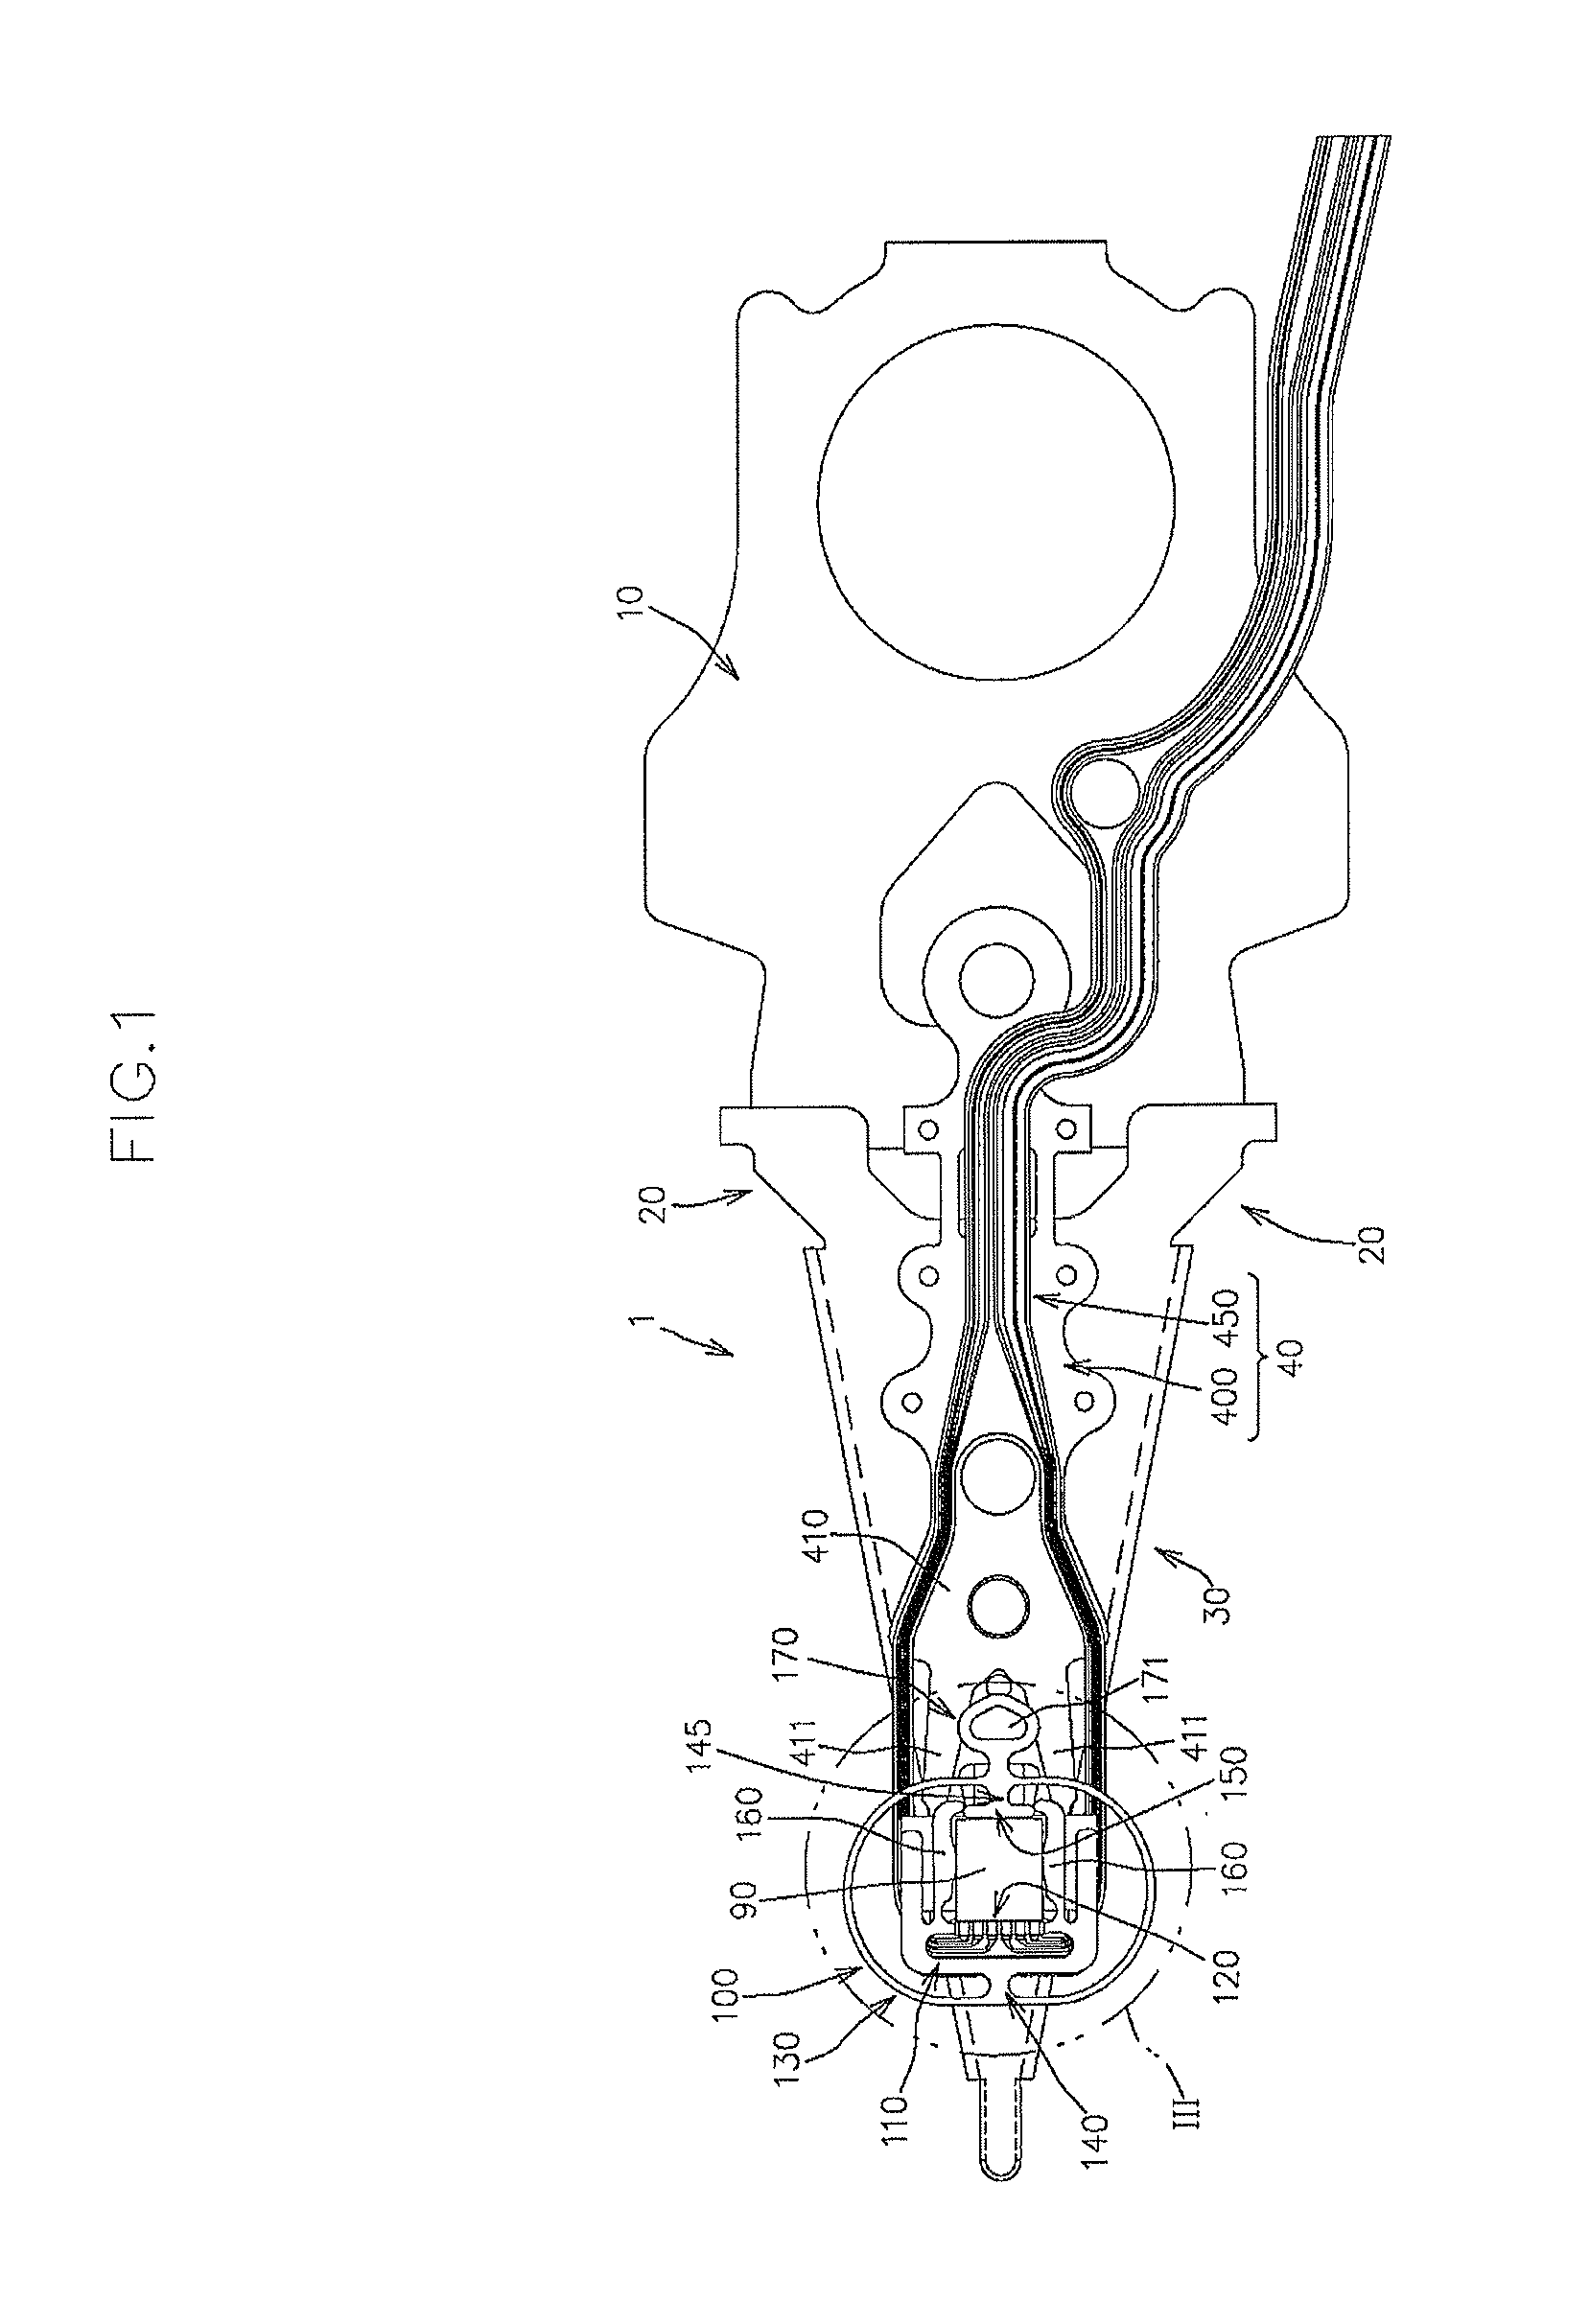 Magnetic Head Slider Locking Apparatus